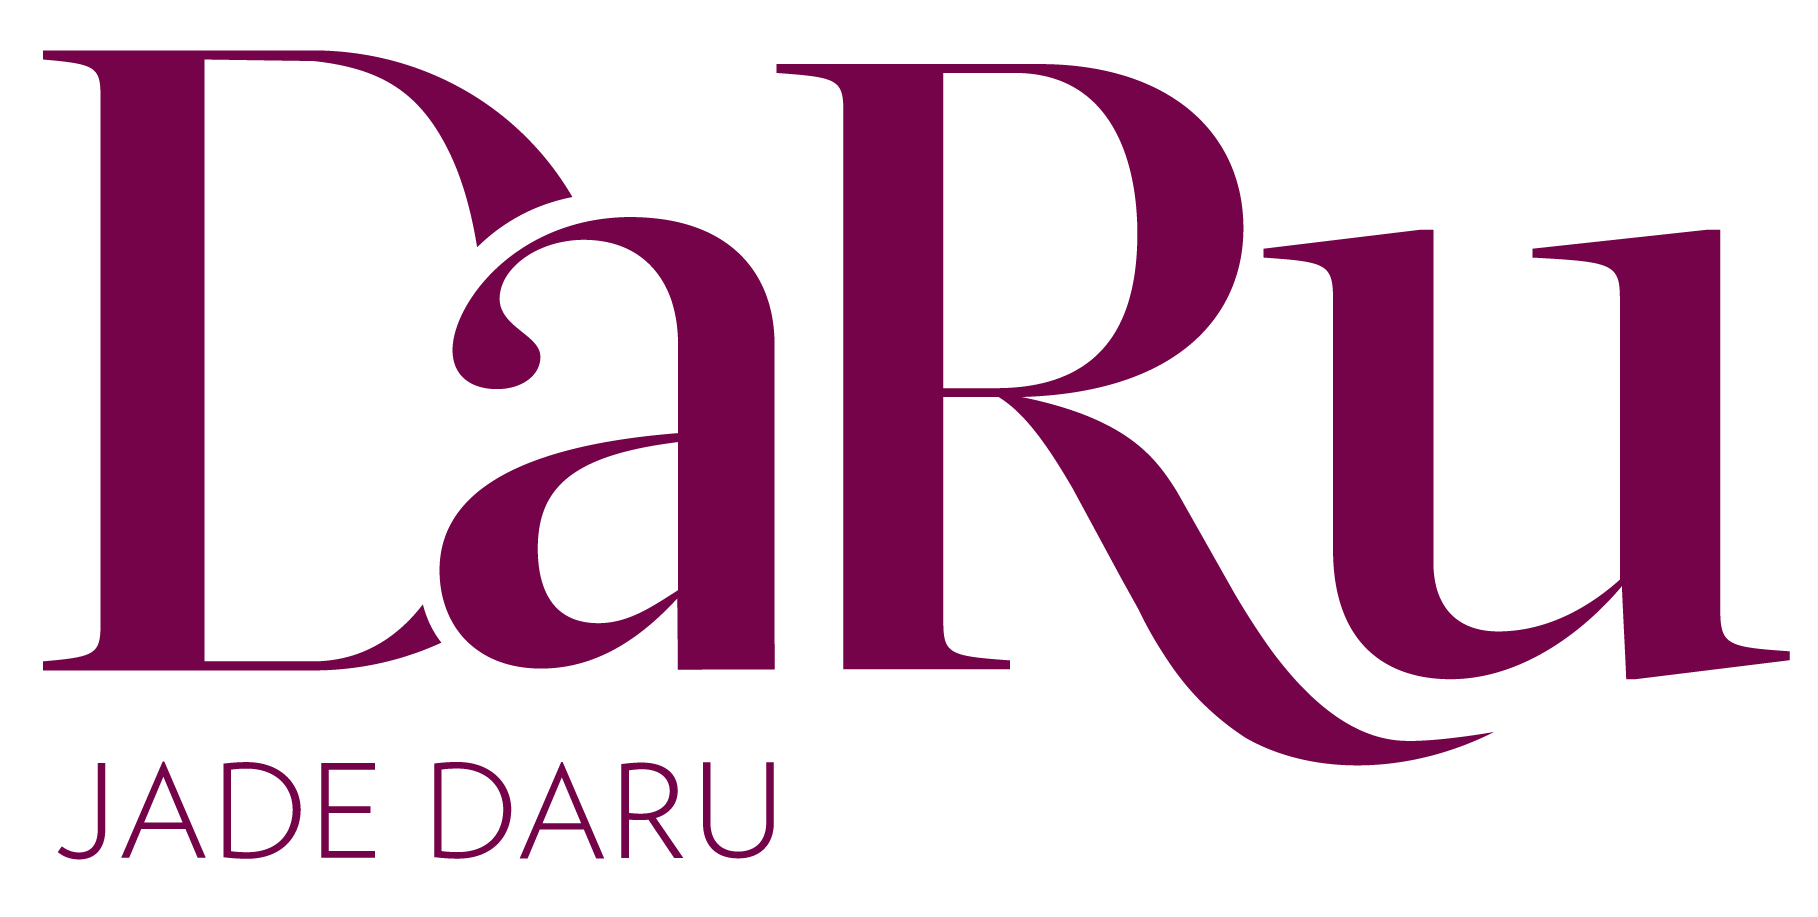 Jade Daru